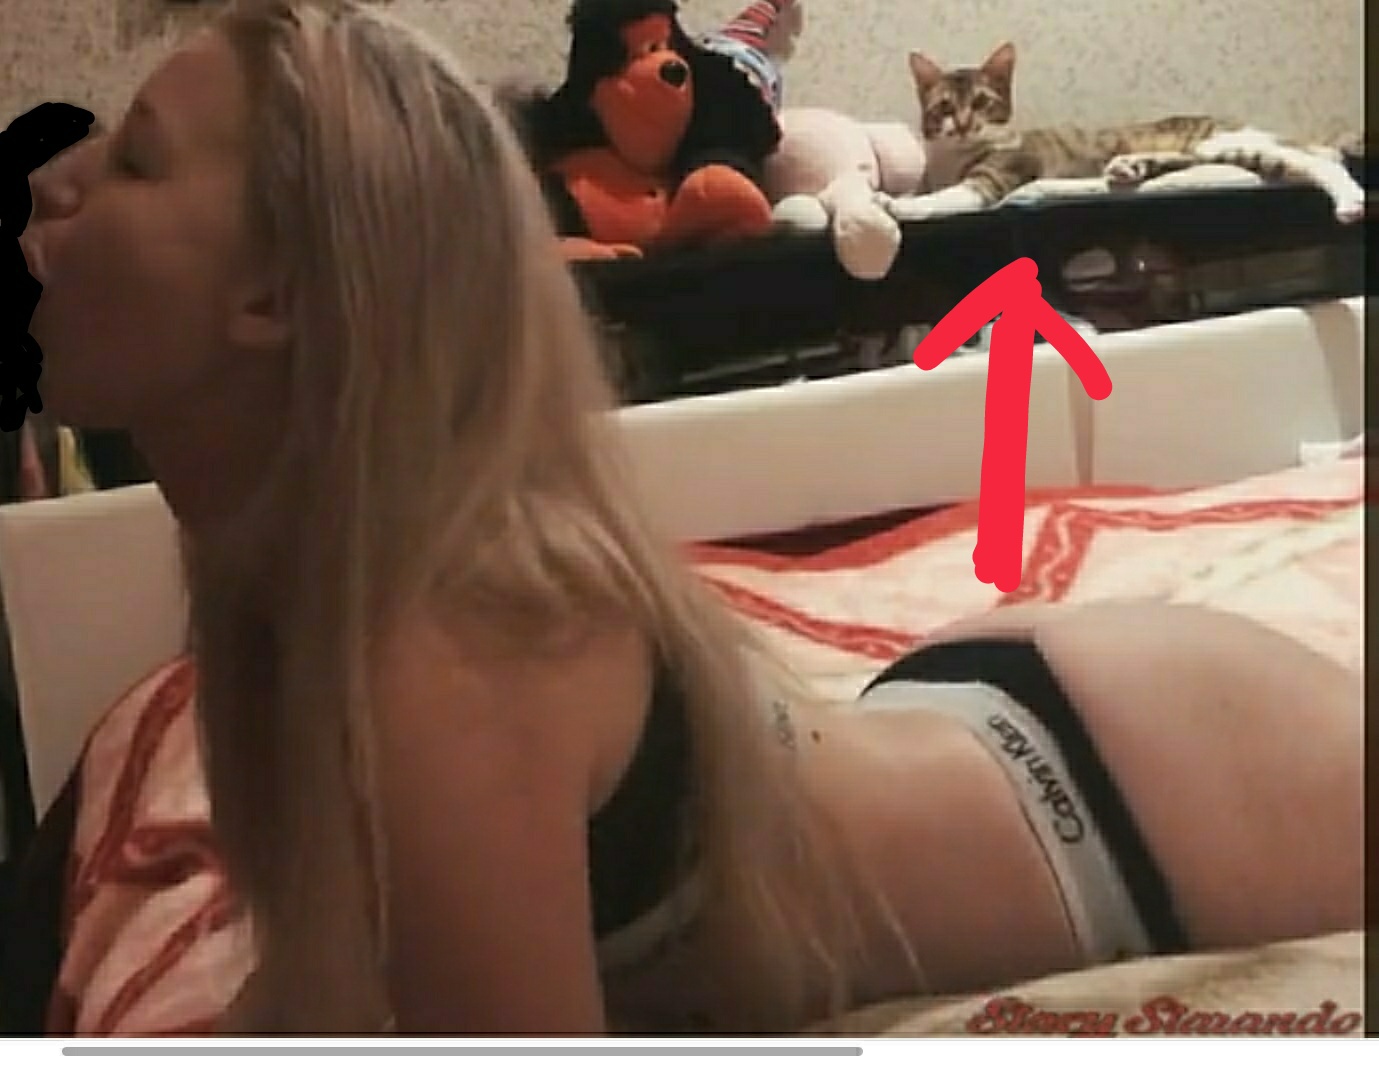 Stacy starando порно фото 45